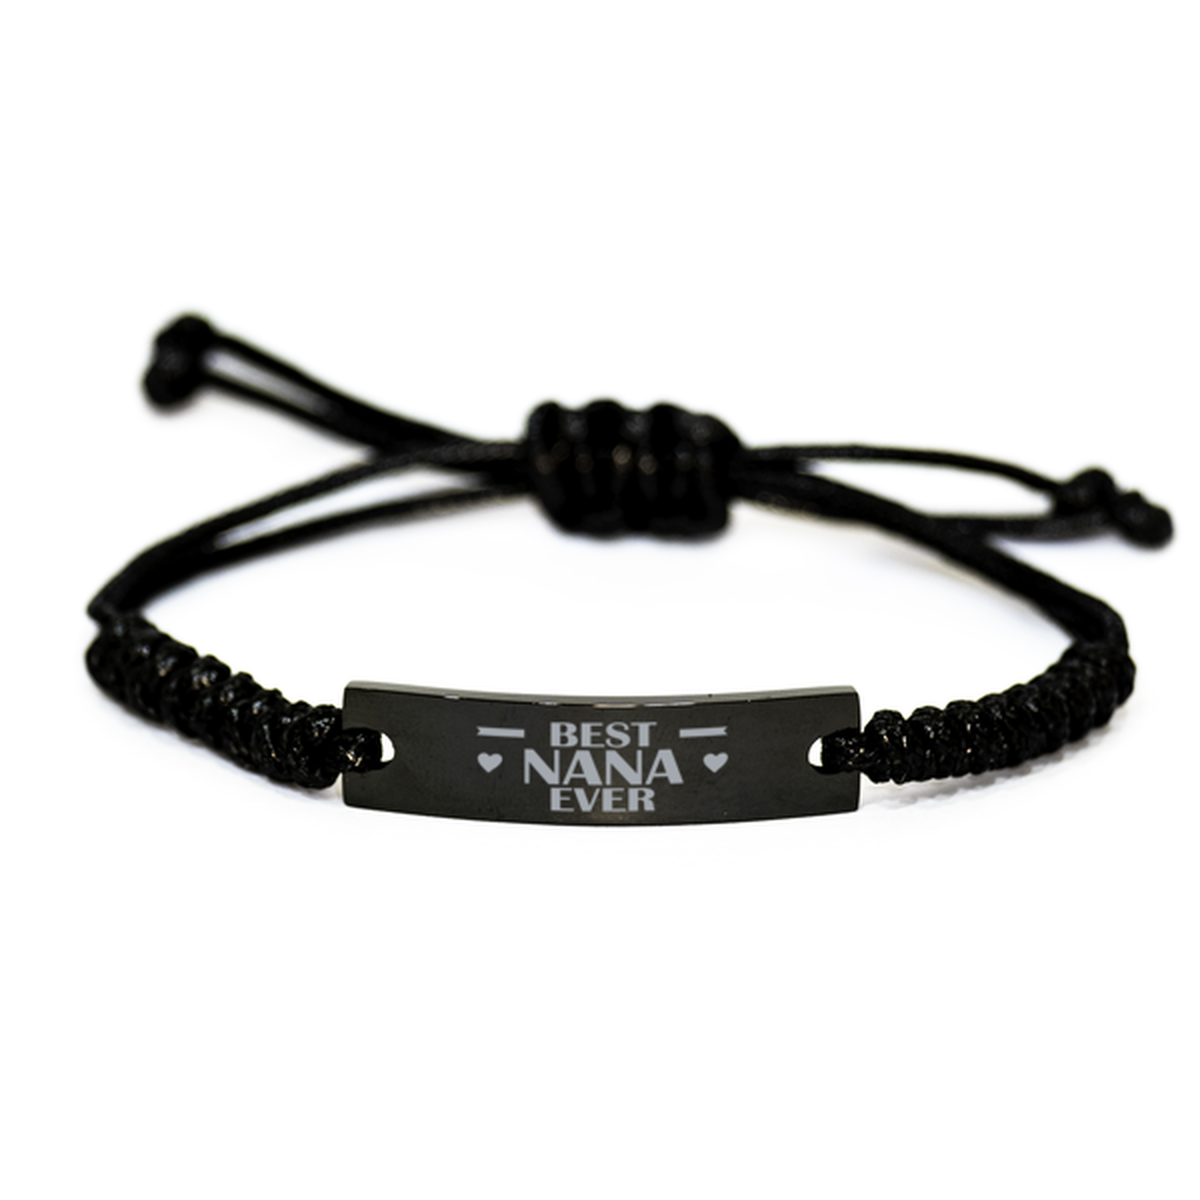 Best Nana Ever Nana Gifts, Funny Engraved Rope Bracelet For Nana, Birthday Family Gifts For Women